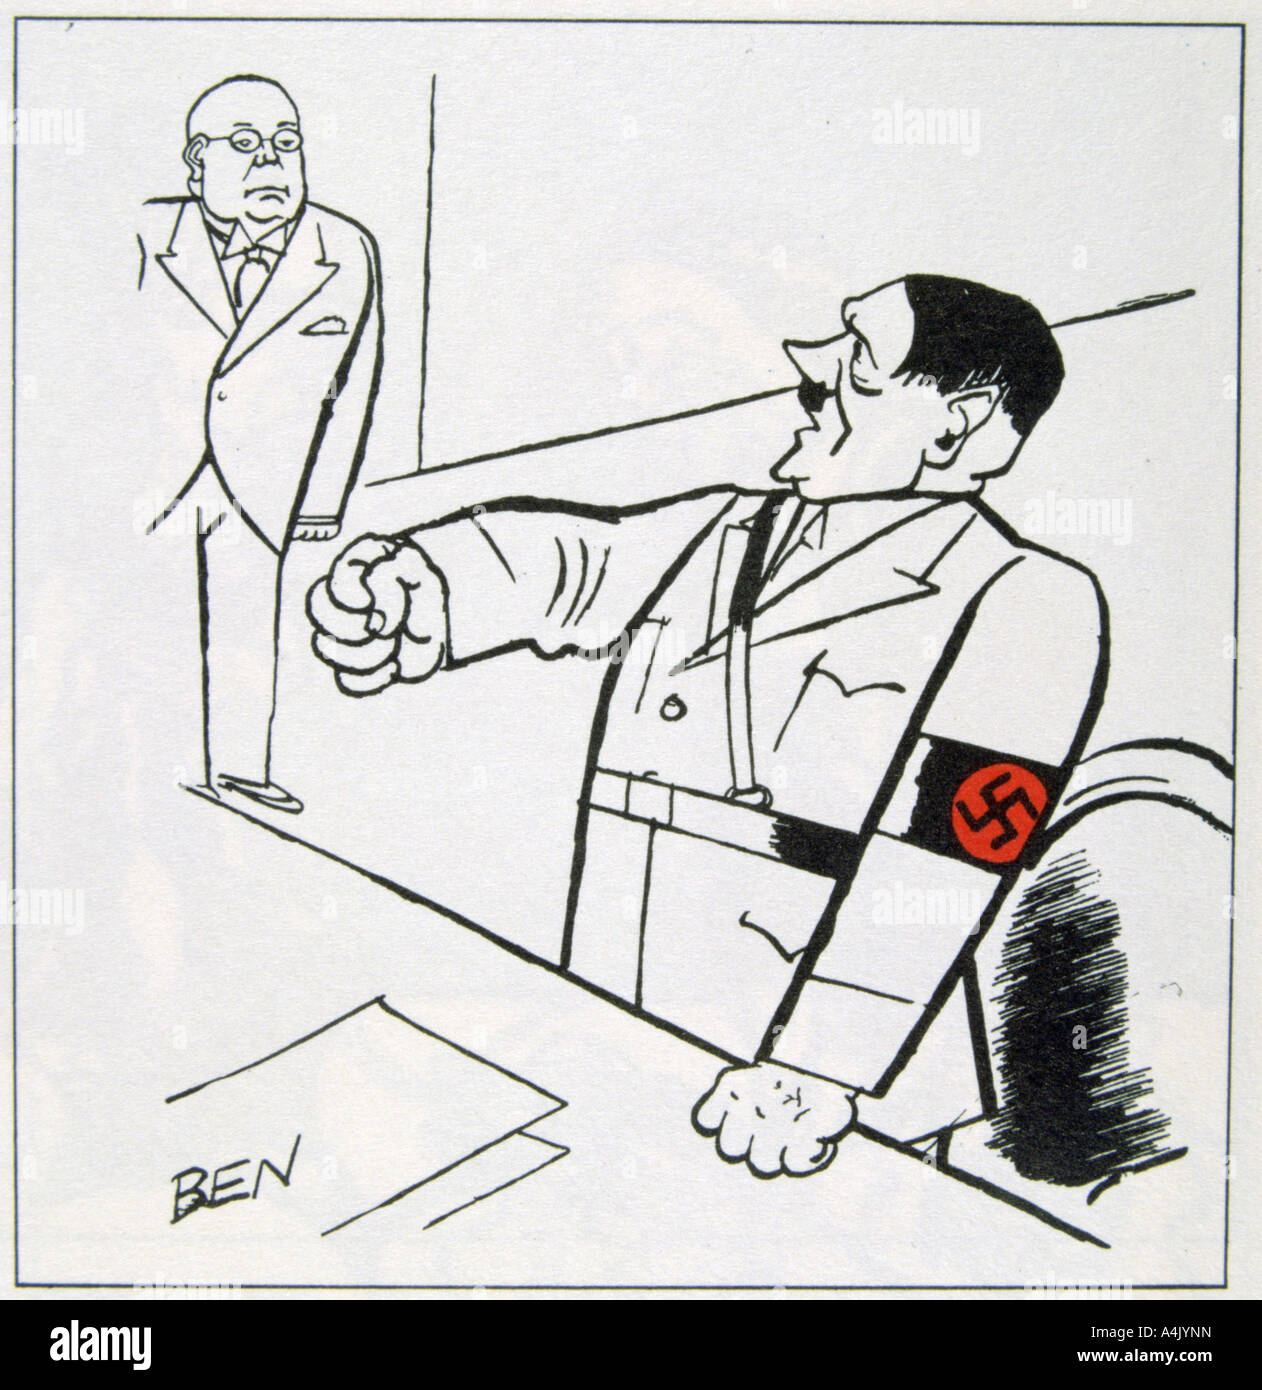 Una caricatura de Adolf Hitler, 1936. Artista: Ben Foto de stock